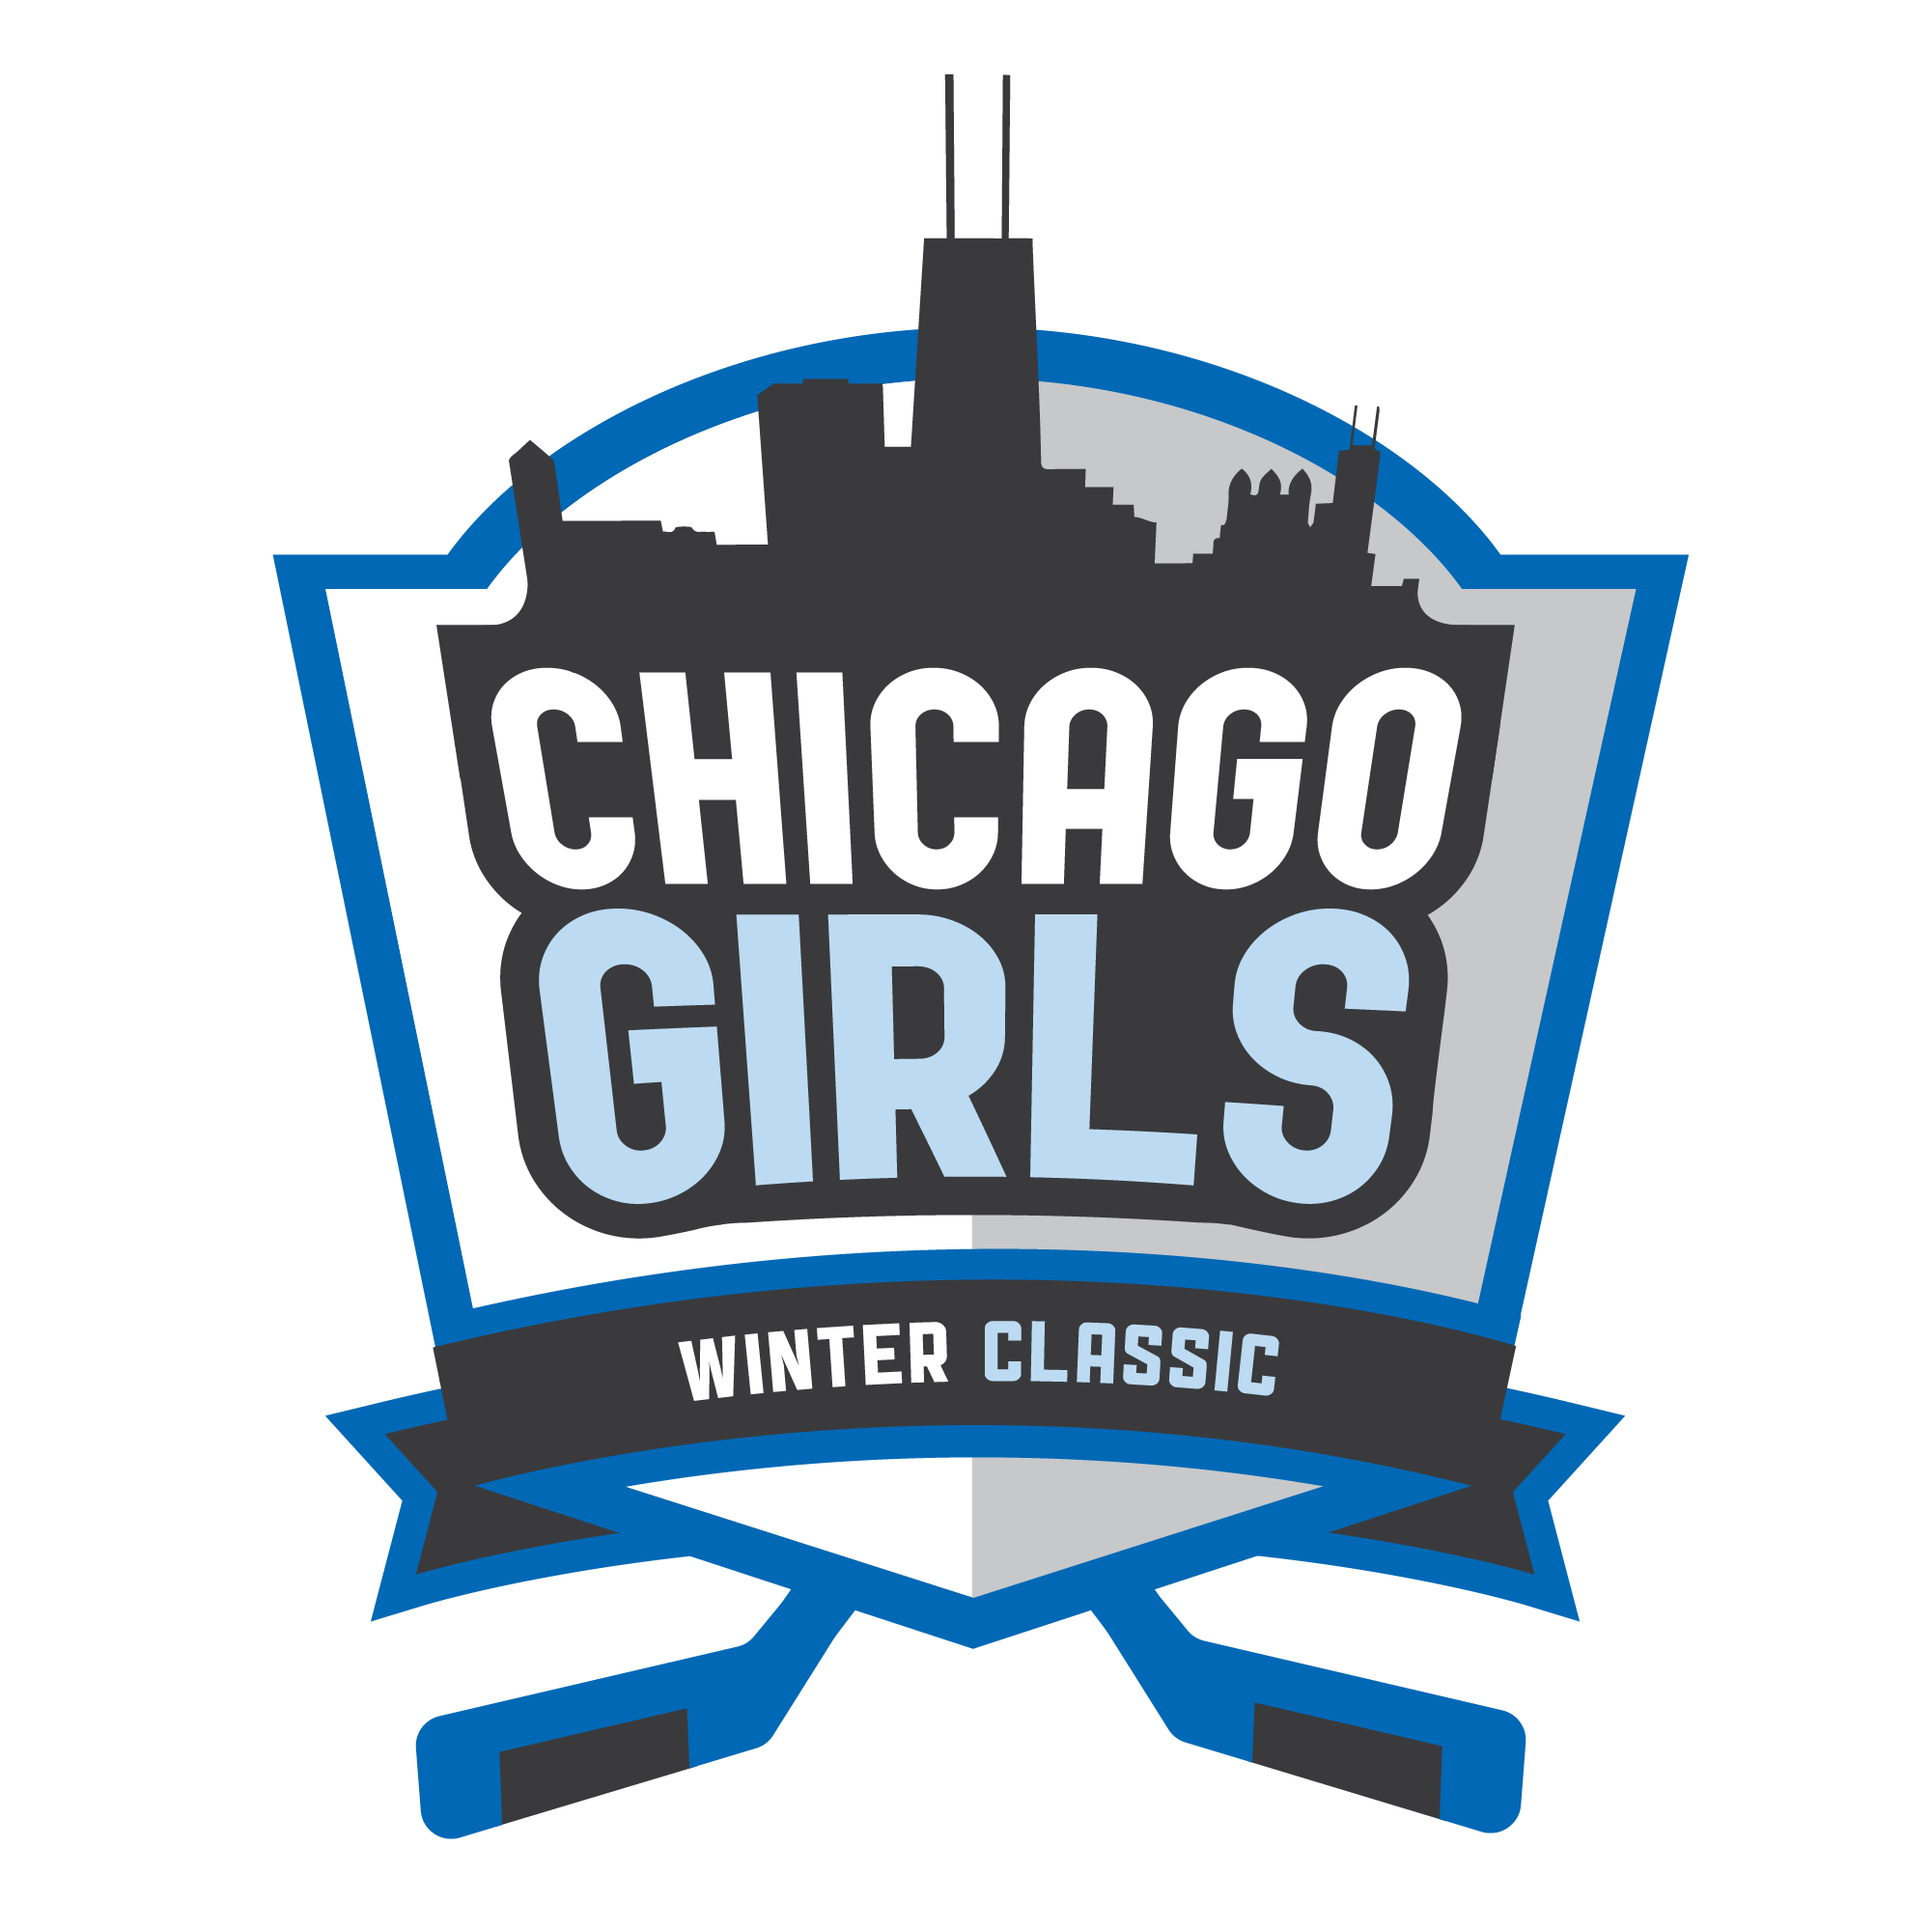 CHICAGO GIRLS WINTER CLASSIC - SHOWCASE EVENT